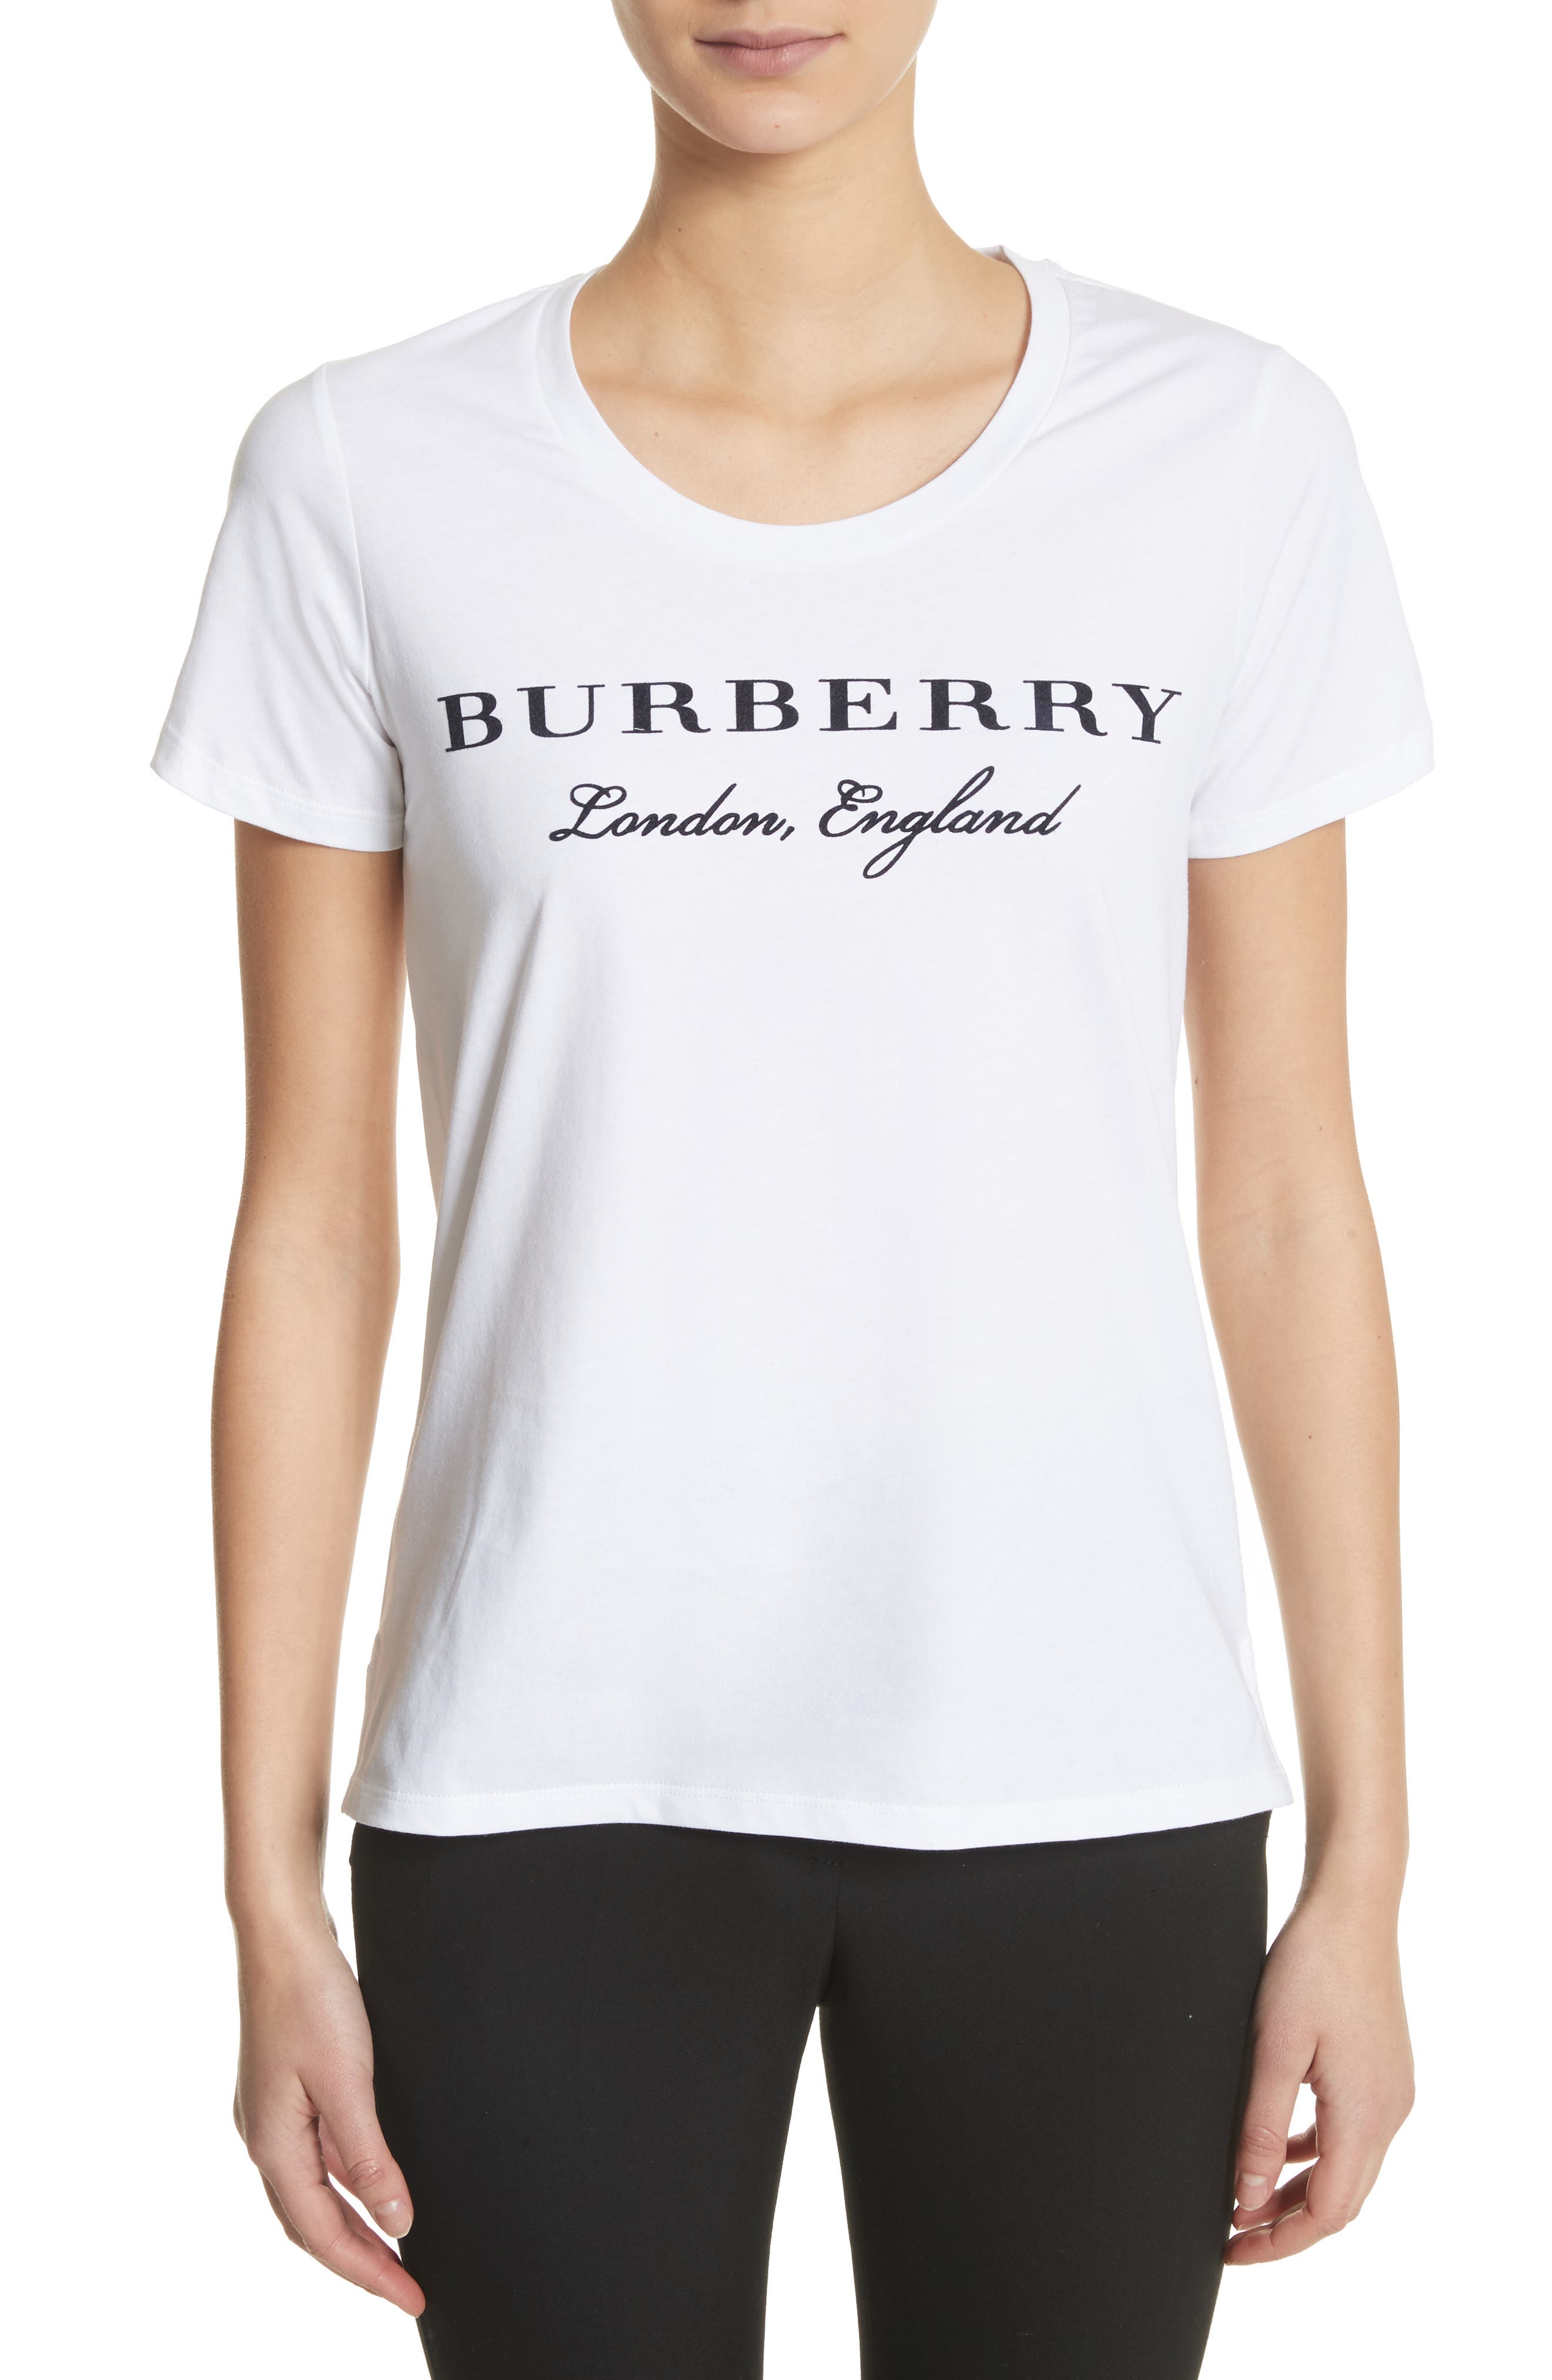 burberry double logo t shirt